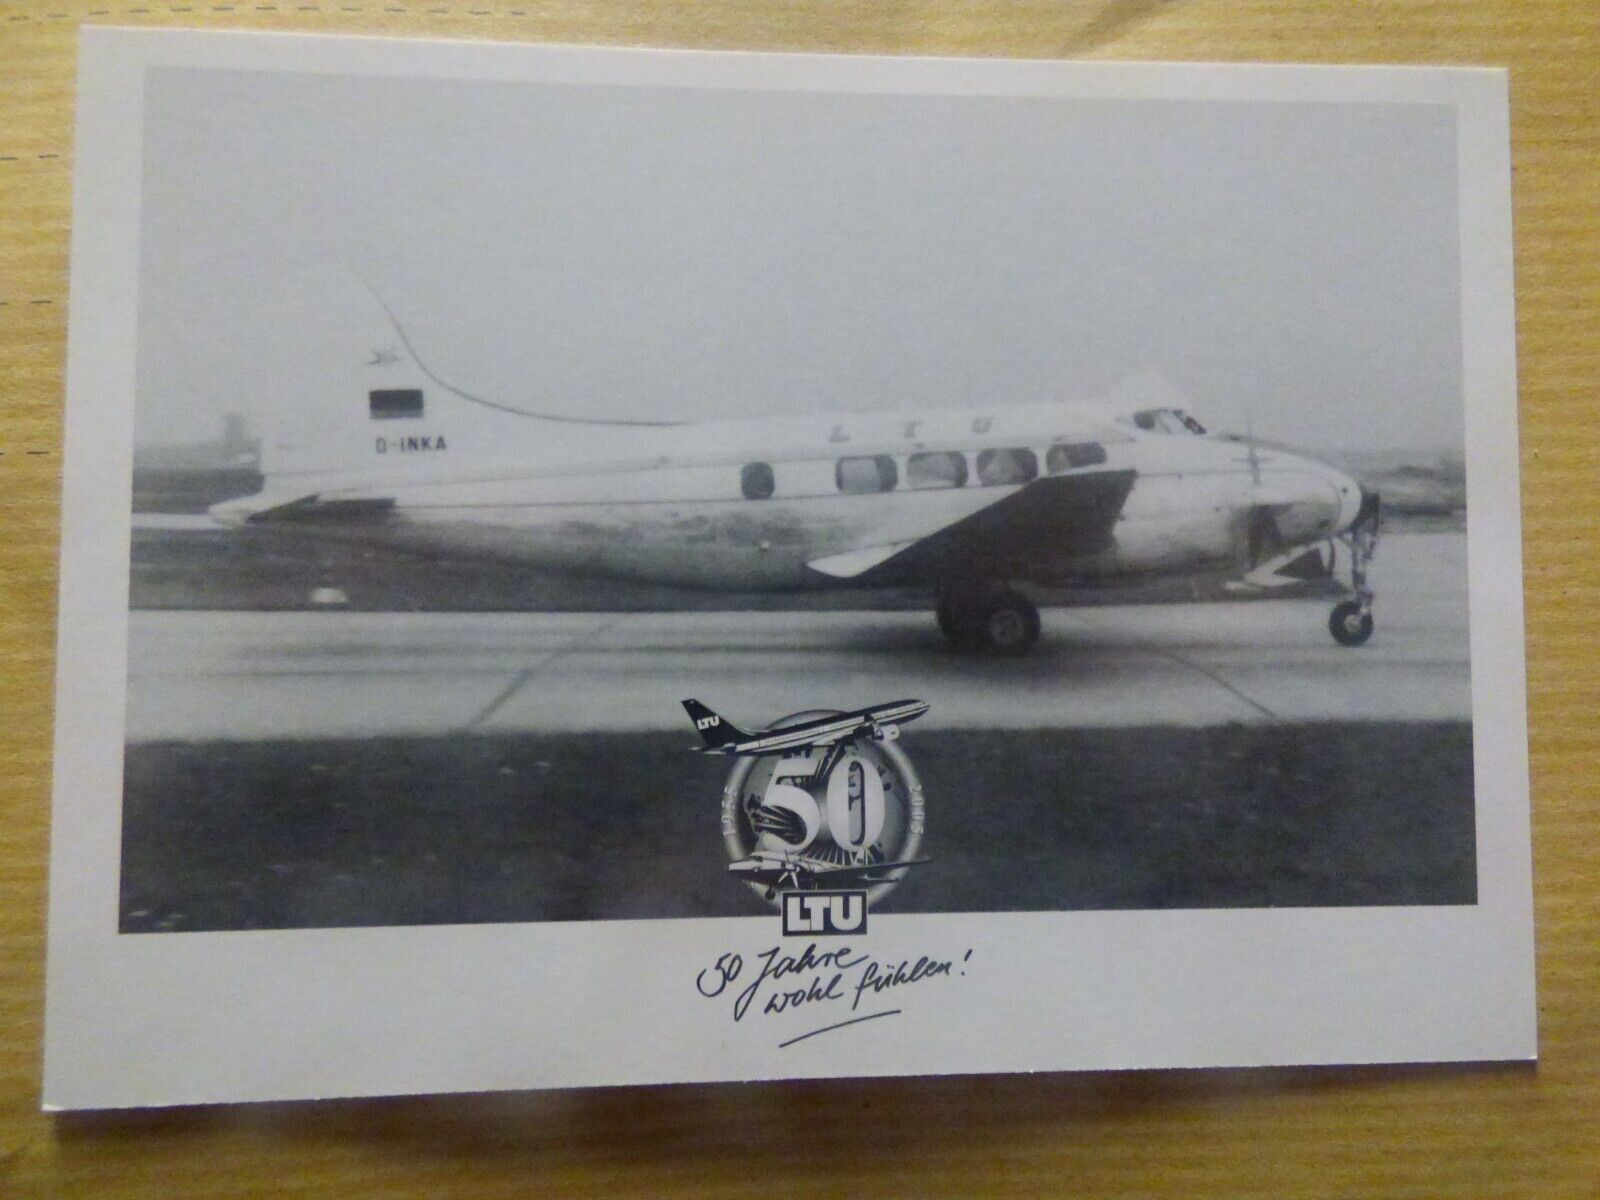 LTU DE HAVILLAND DH-104 DOVE AIRLINE ISSUE / COMPANY CARDS